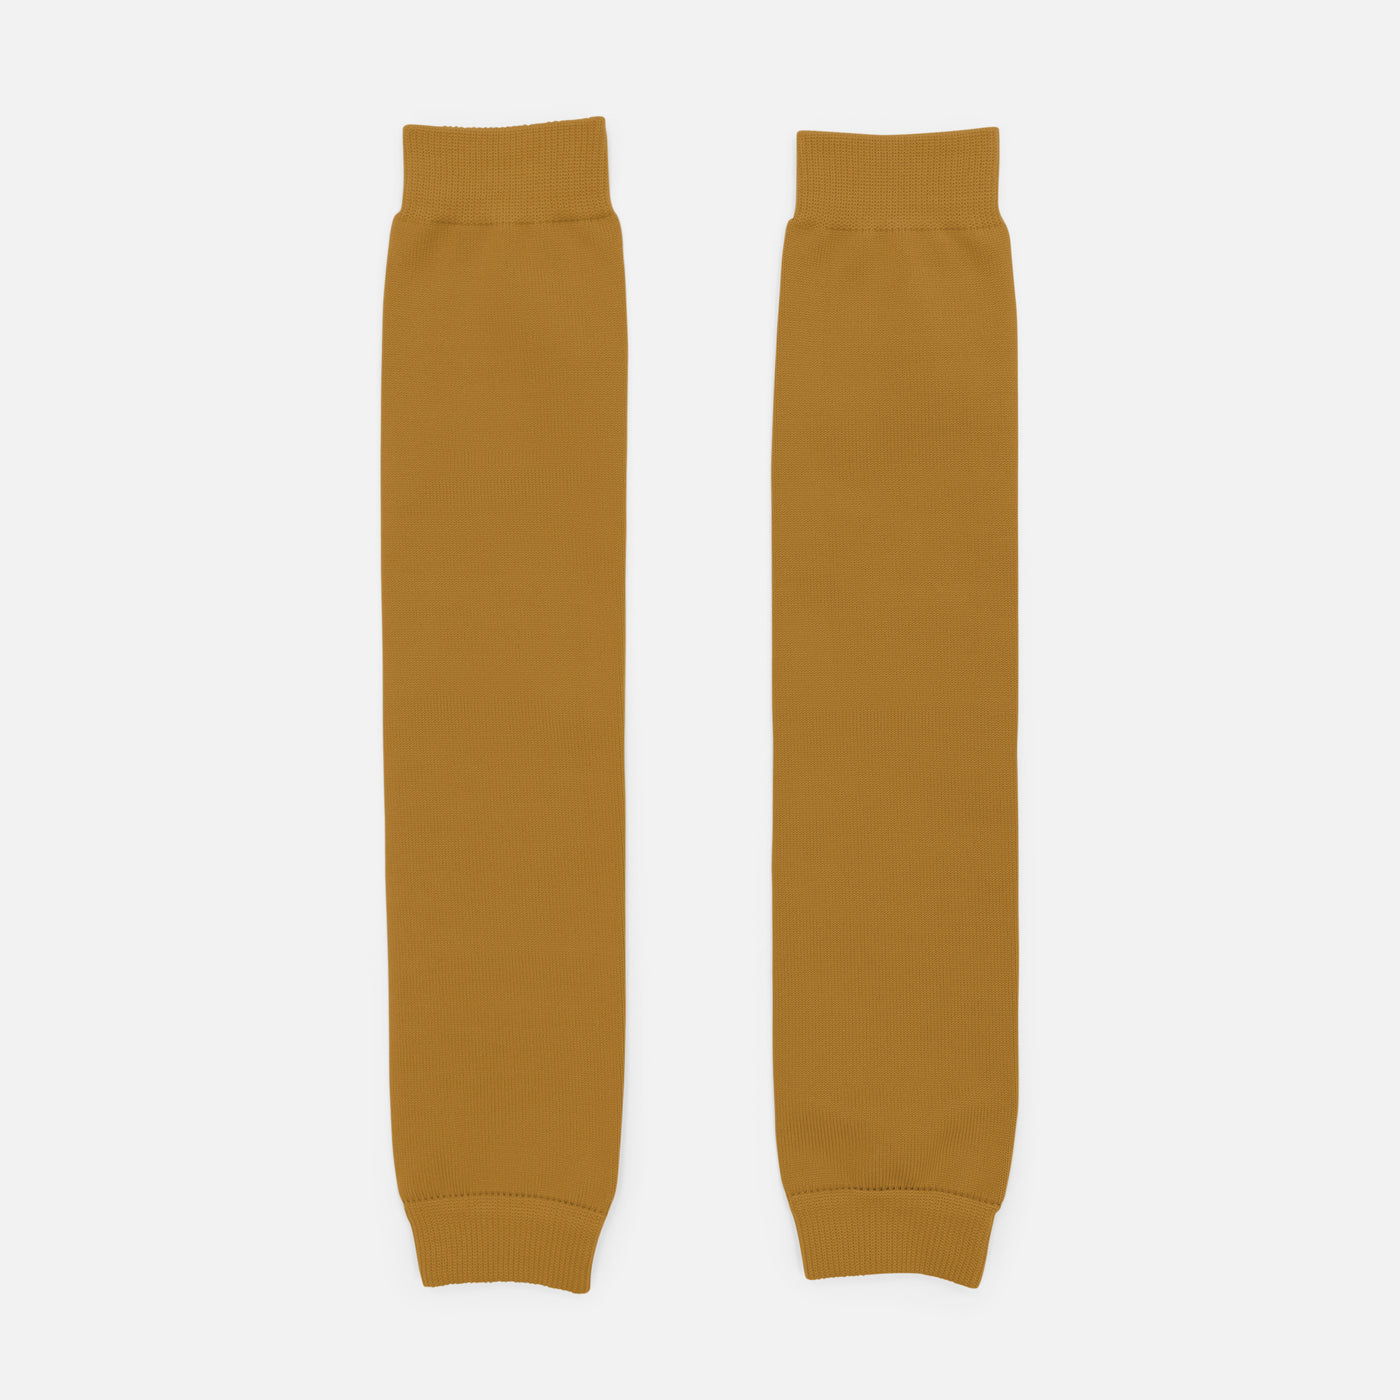 Hue Gold Scrunchie Leg Sleeves